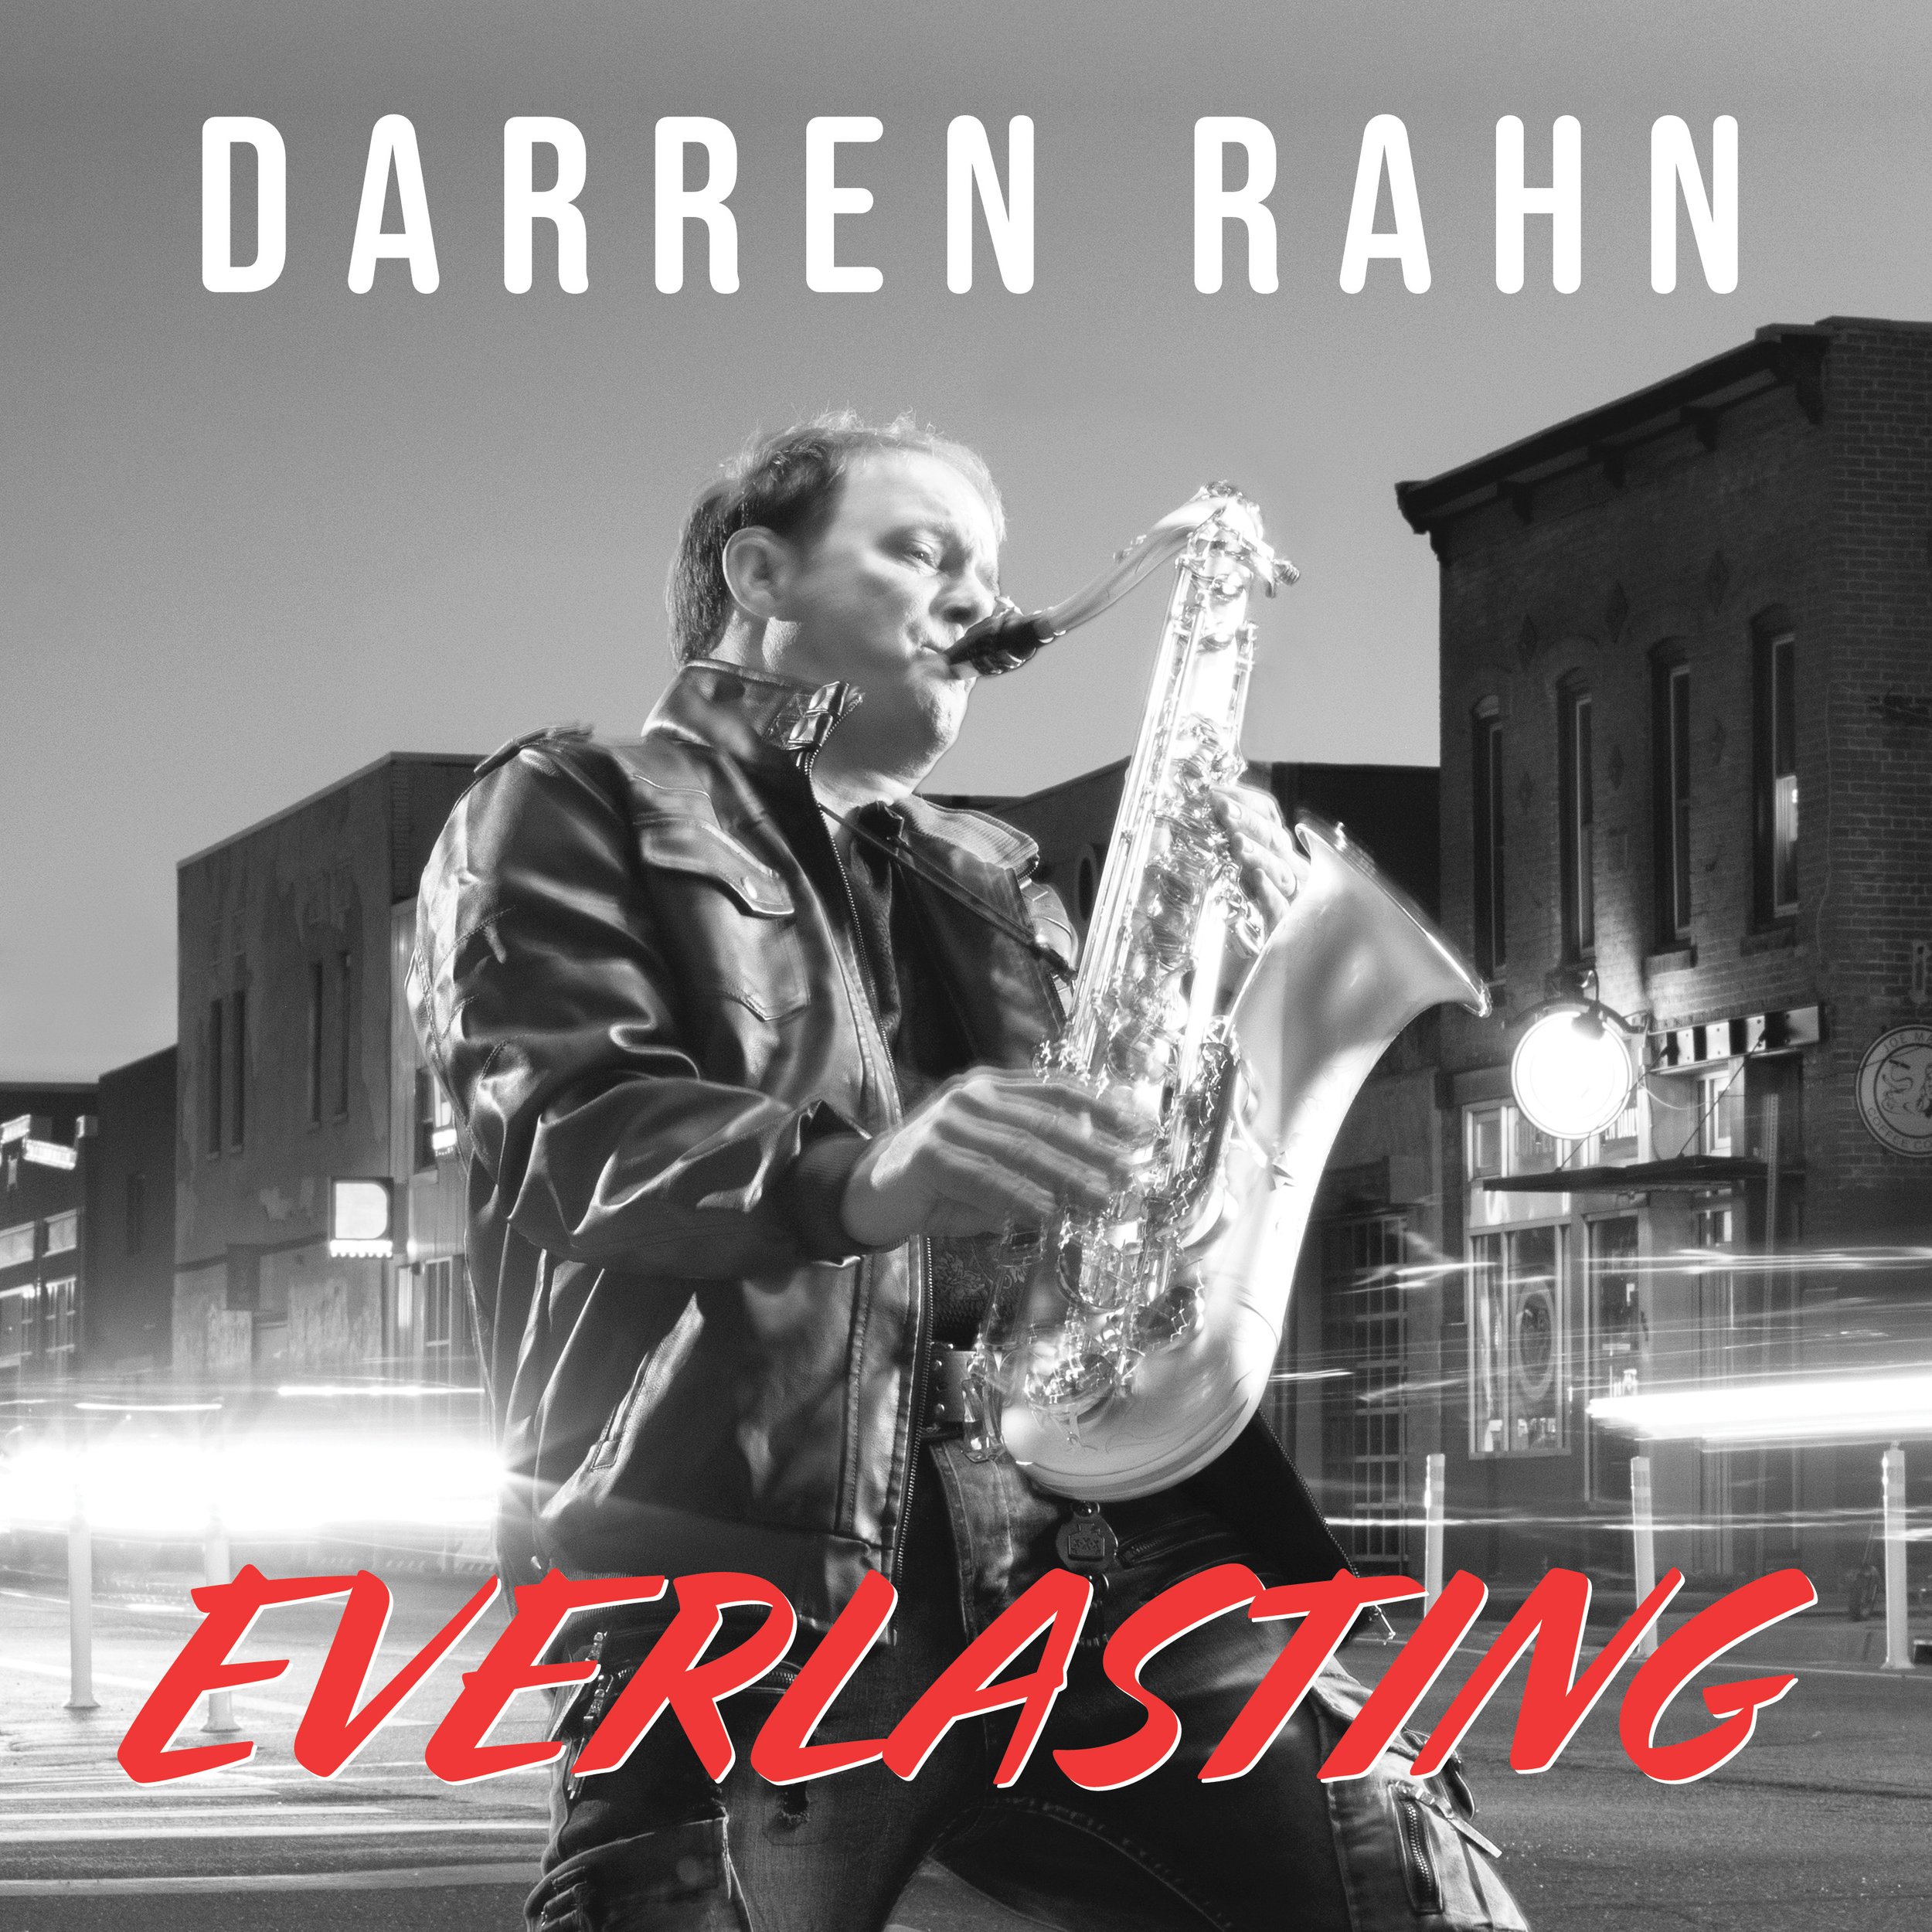 Darren Rahn "Everlasting" Single